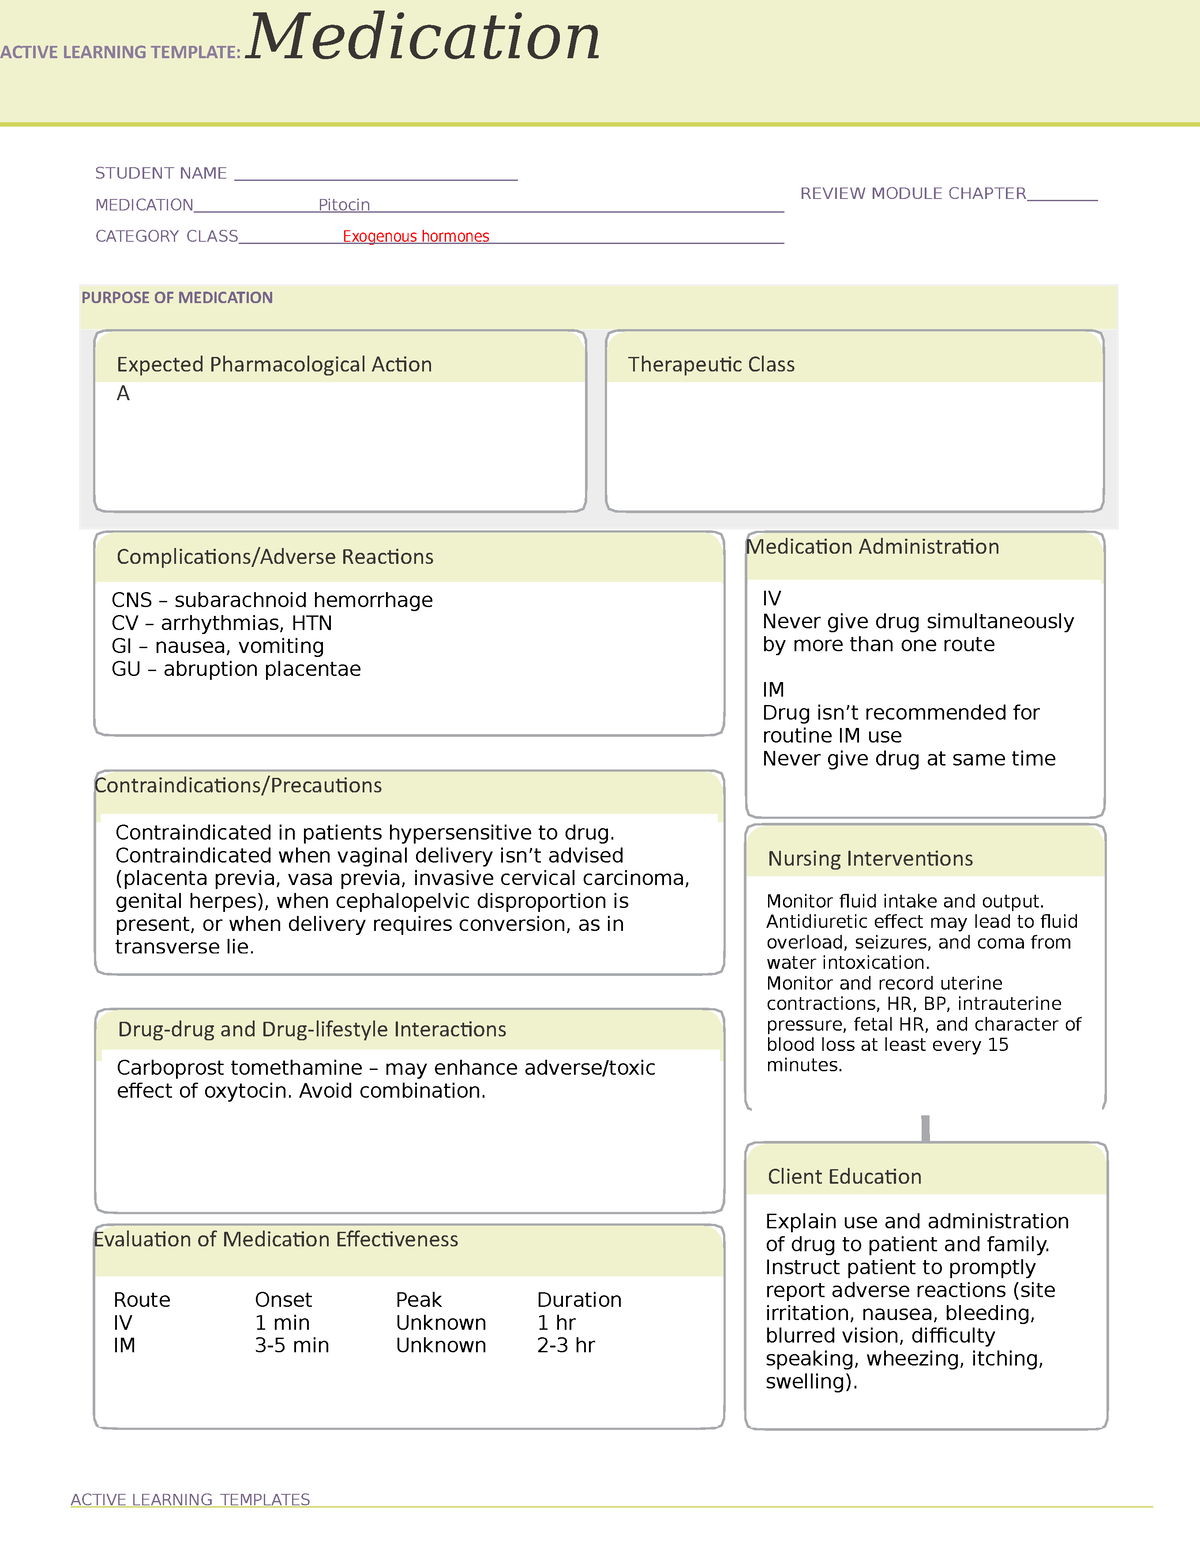 ATI Medication form for Pitocin (Oxytocin) for Medical/Surgical Class ...